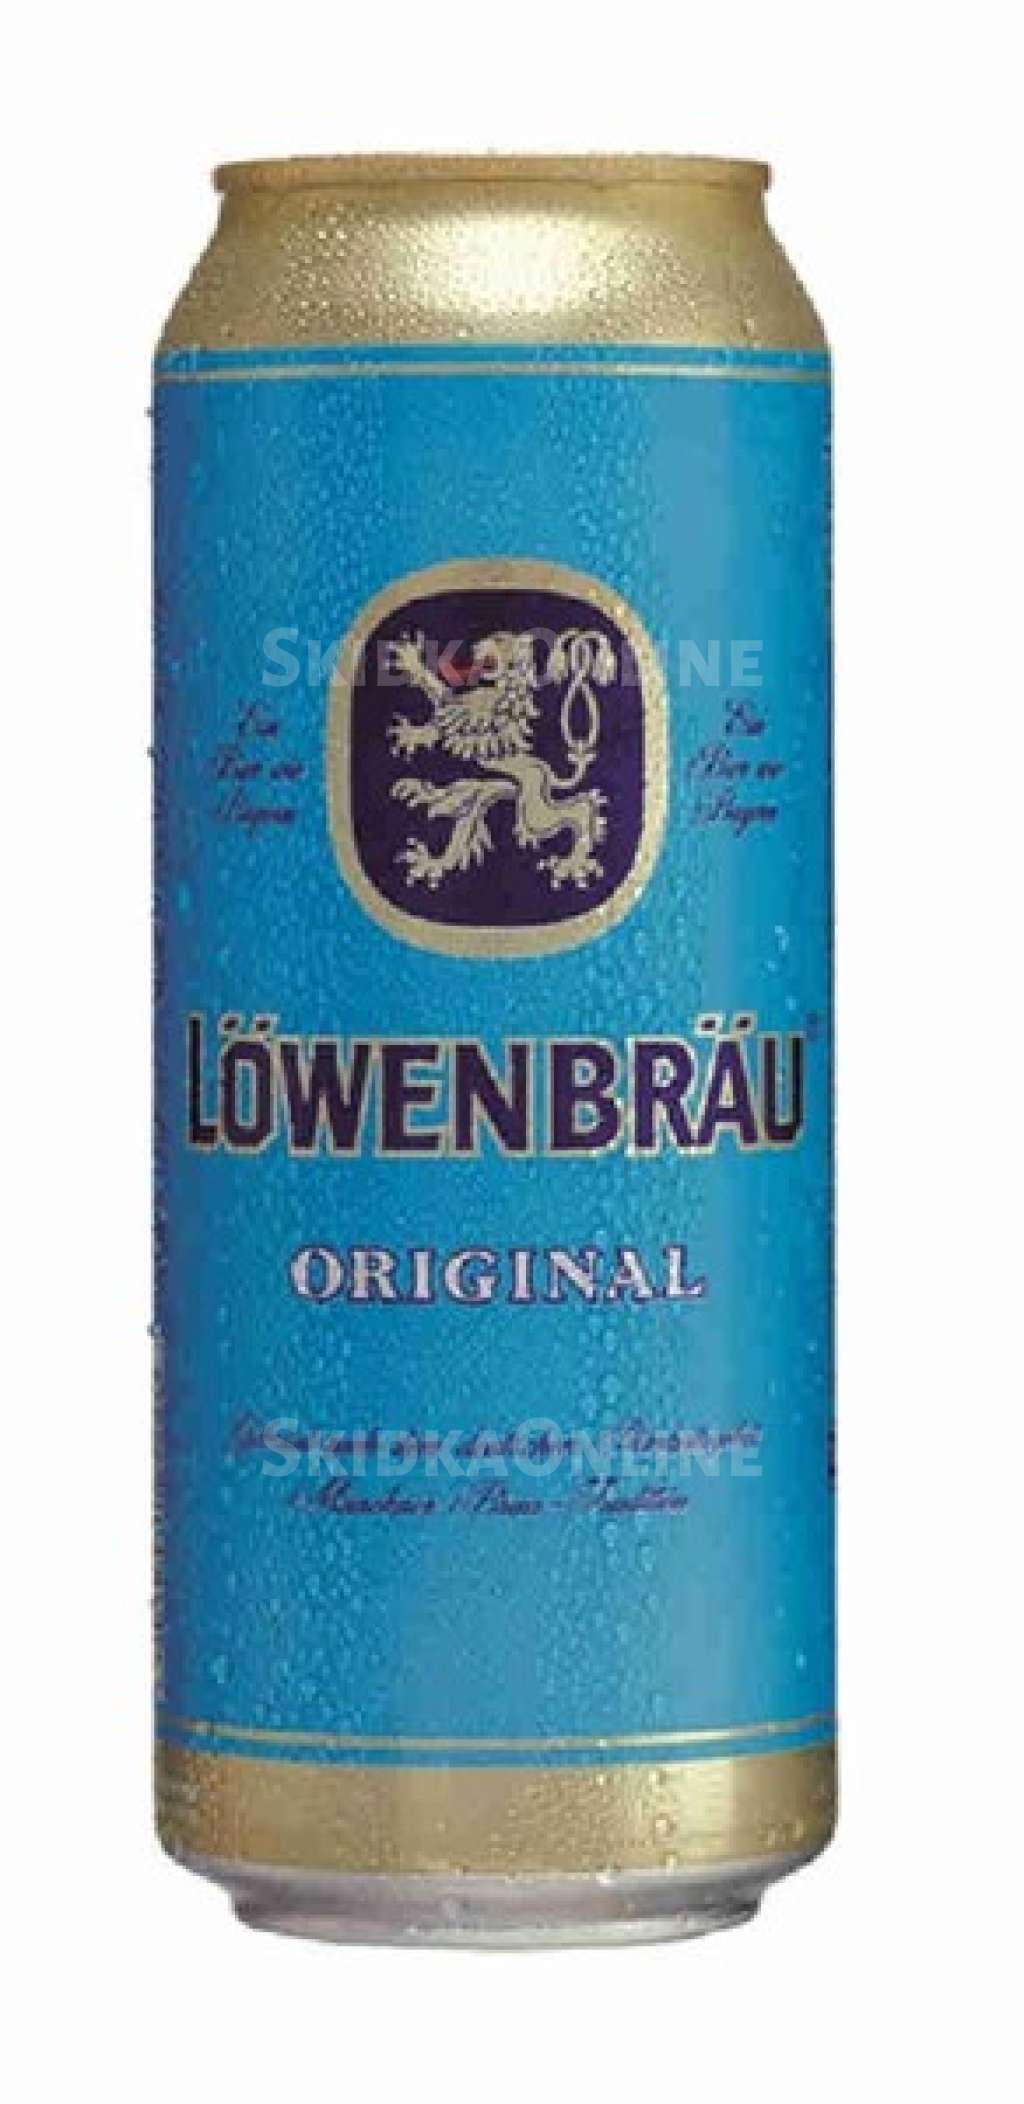 Пиво lowenbrau (левенбраун): история бренда, особенности вкуса и технологии, обзор линейки бренда | inshaker | яндекс дзен